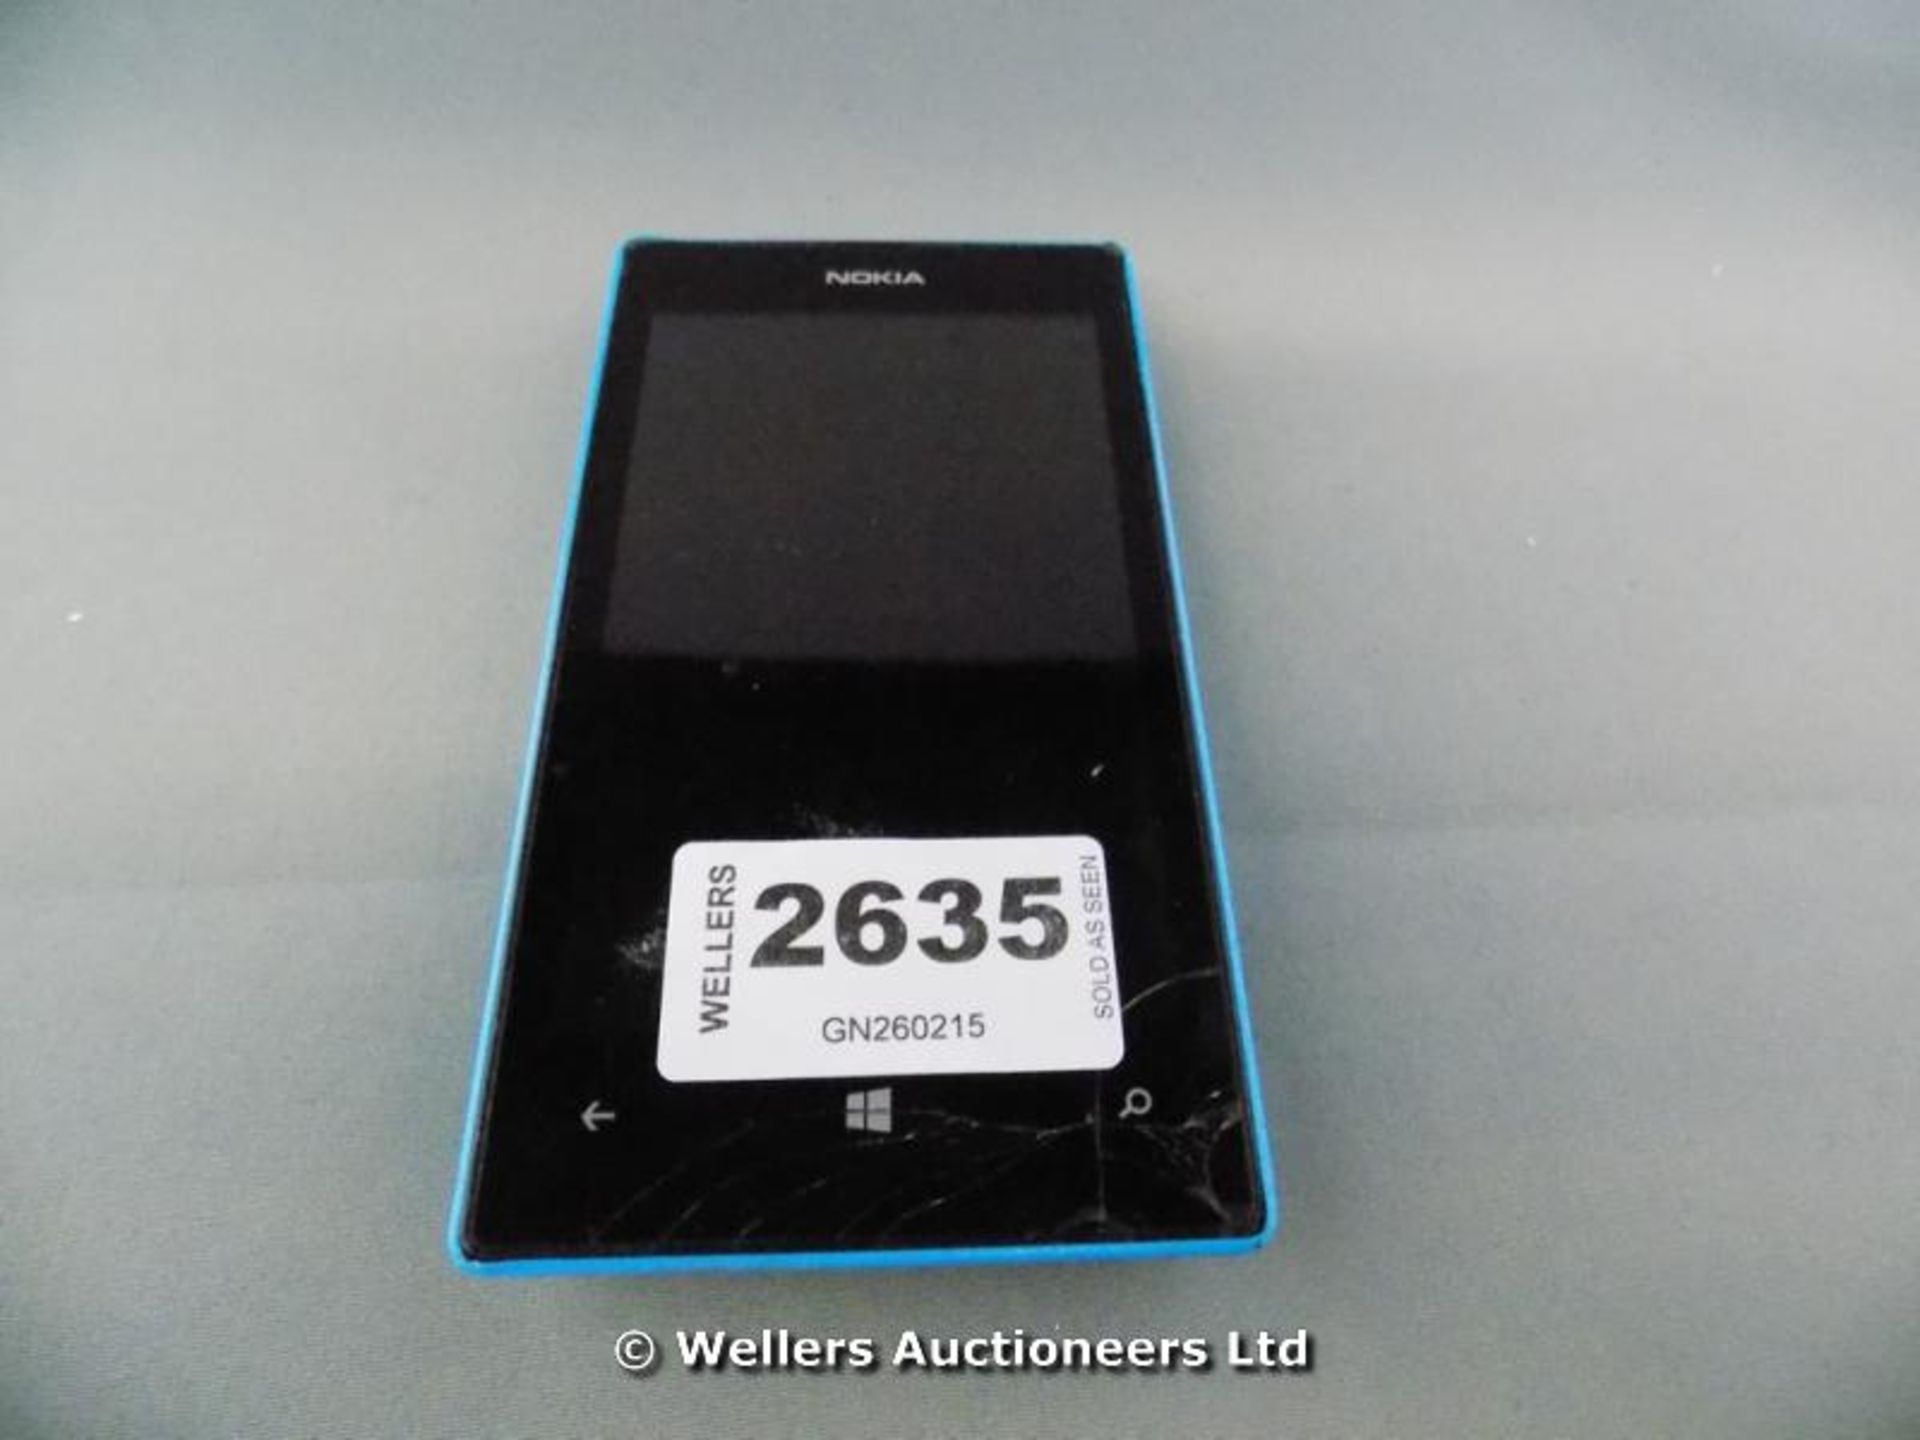 *NOKIA MOBILE PHONE MODEL 520 BLUE DAMAGED / GRADE: UNCLAIMED PROPERTY / UNBOXED (DC1)[GN260215-